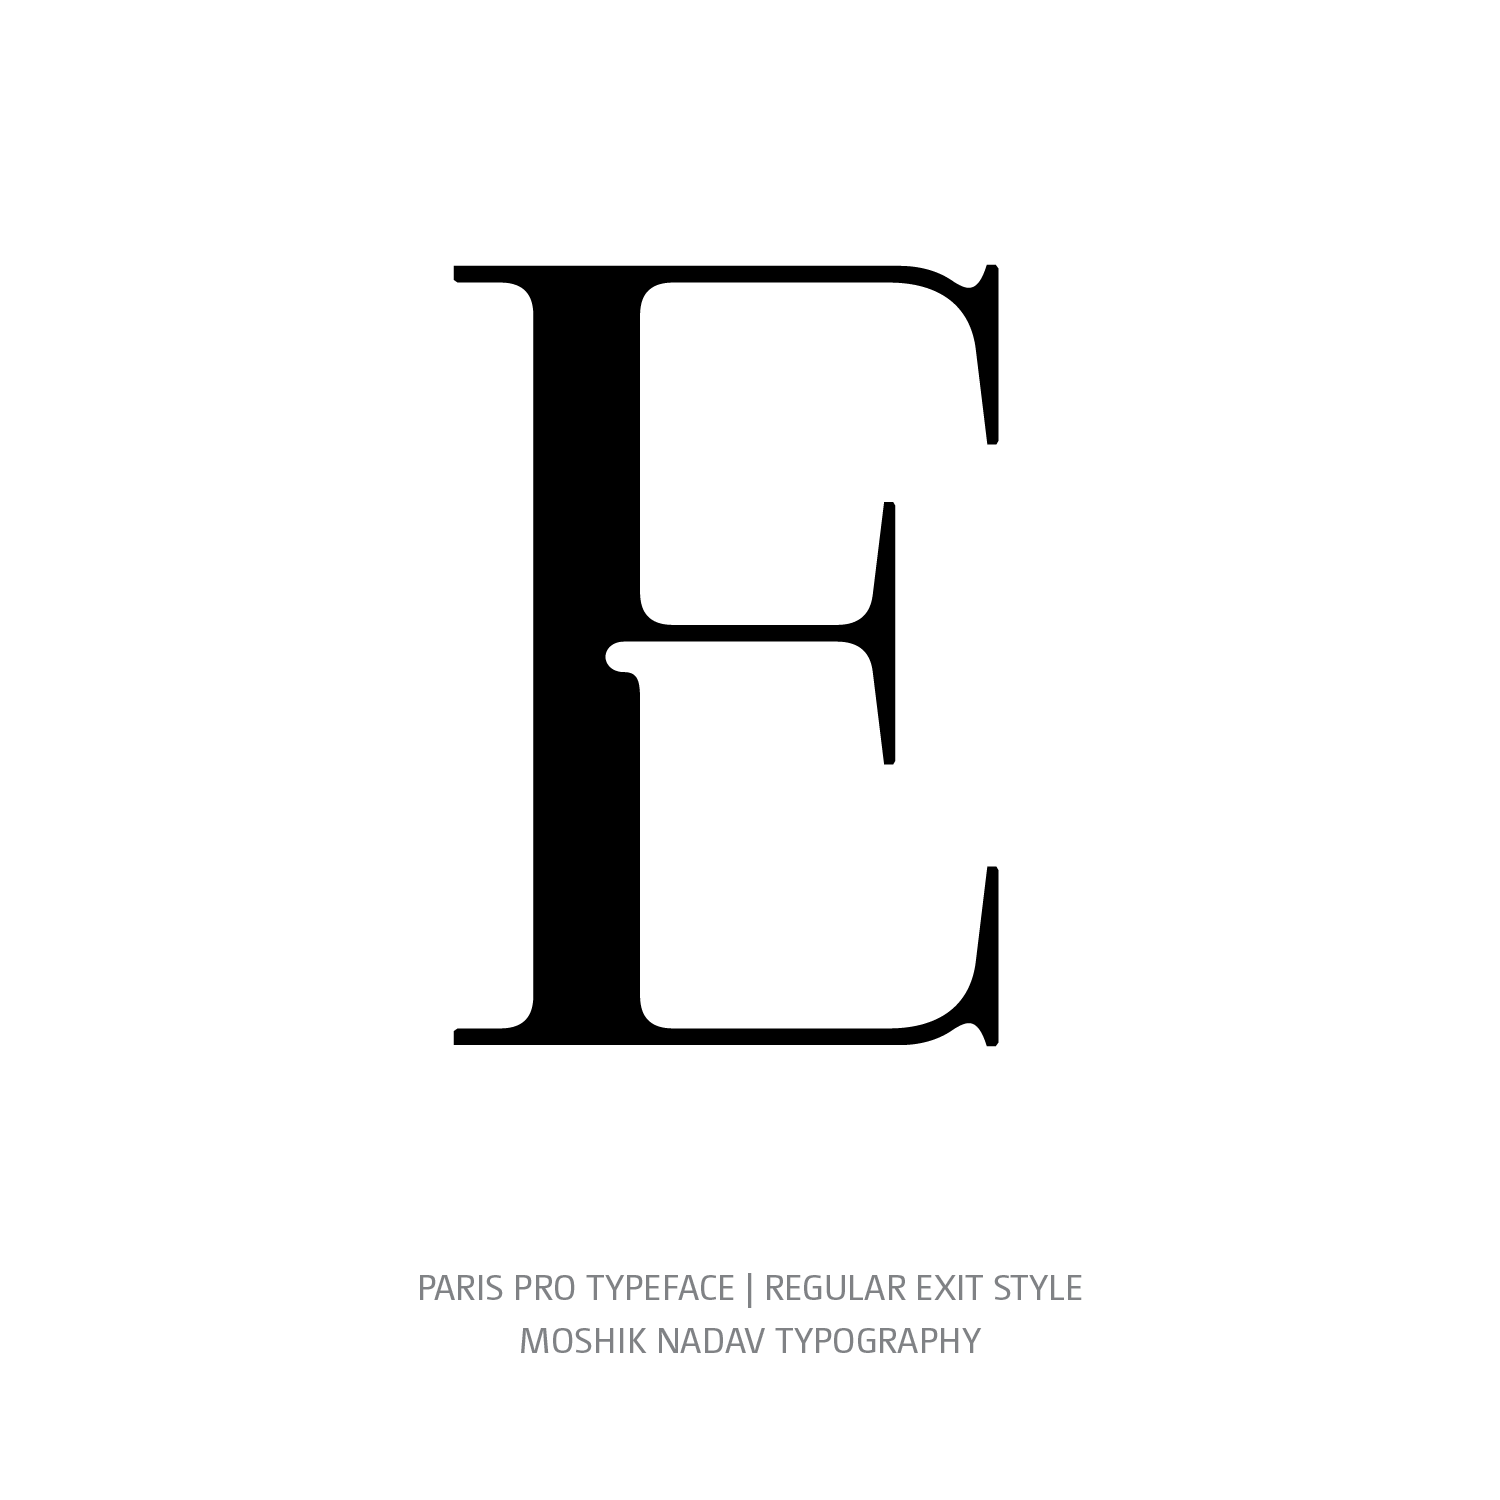 Paris Pro Typeface Regular Exit E